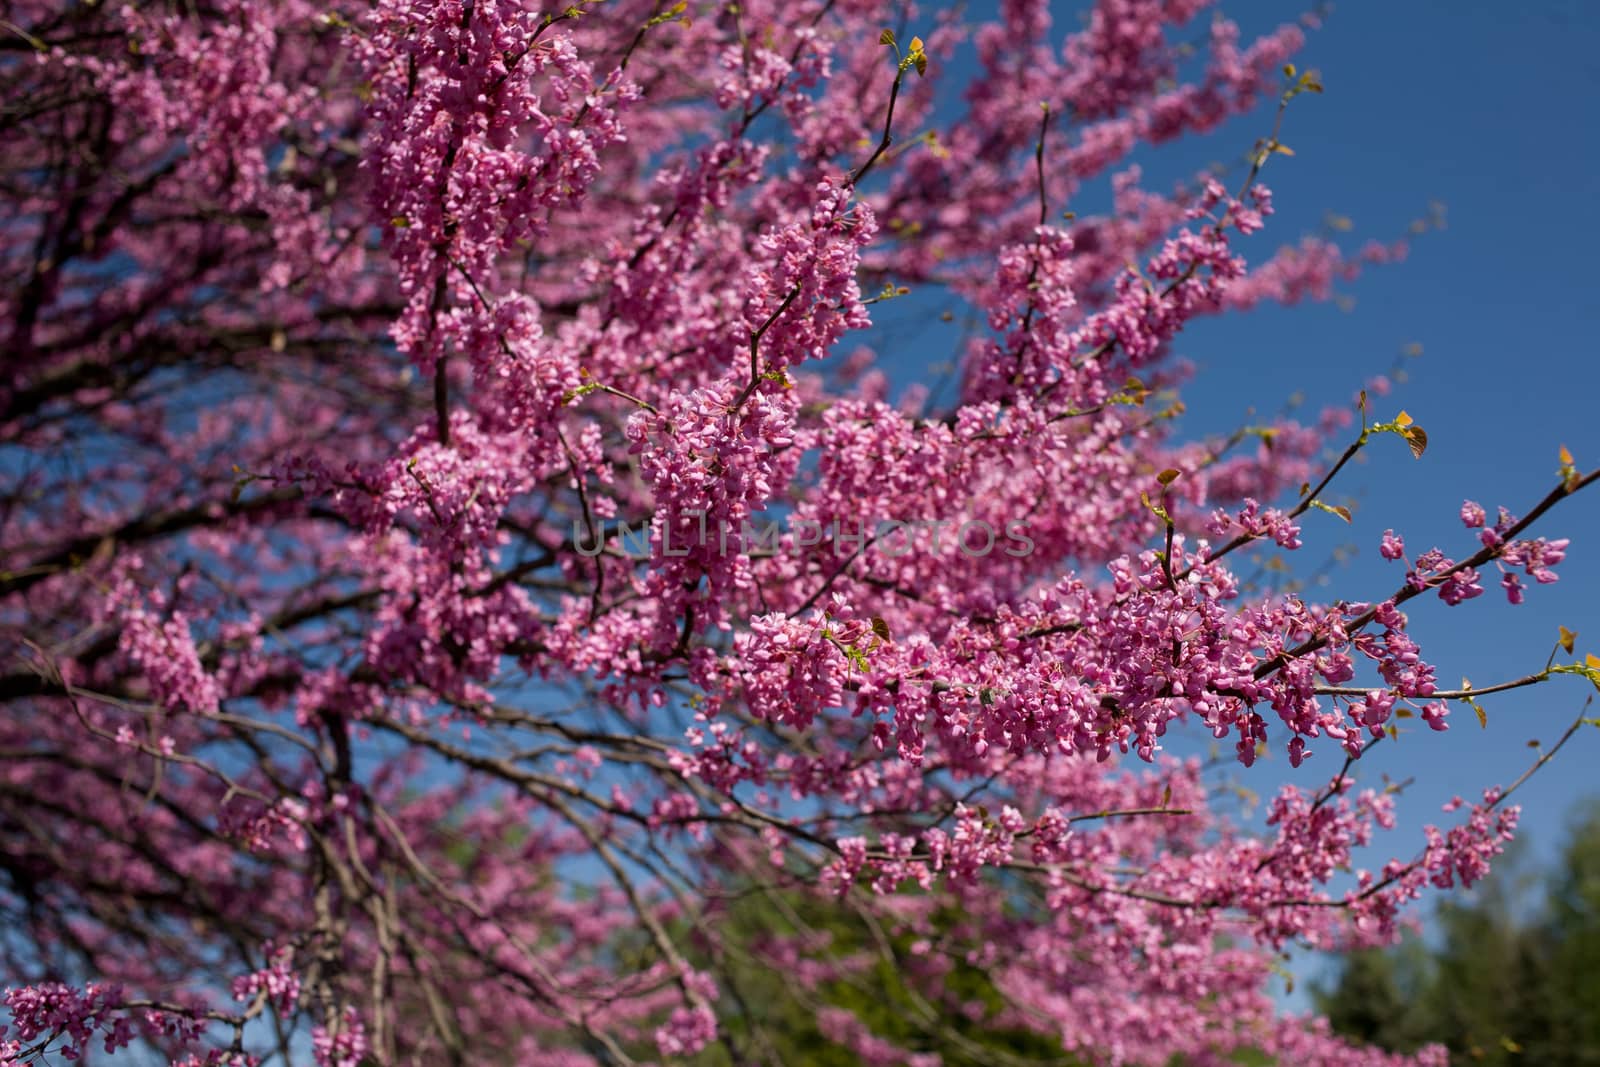 Japanese cherry blossoms against the blue sky in the botanical garden of the city Krivoy Rog in Ukraine